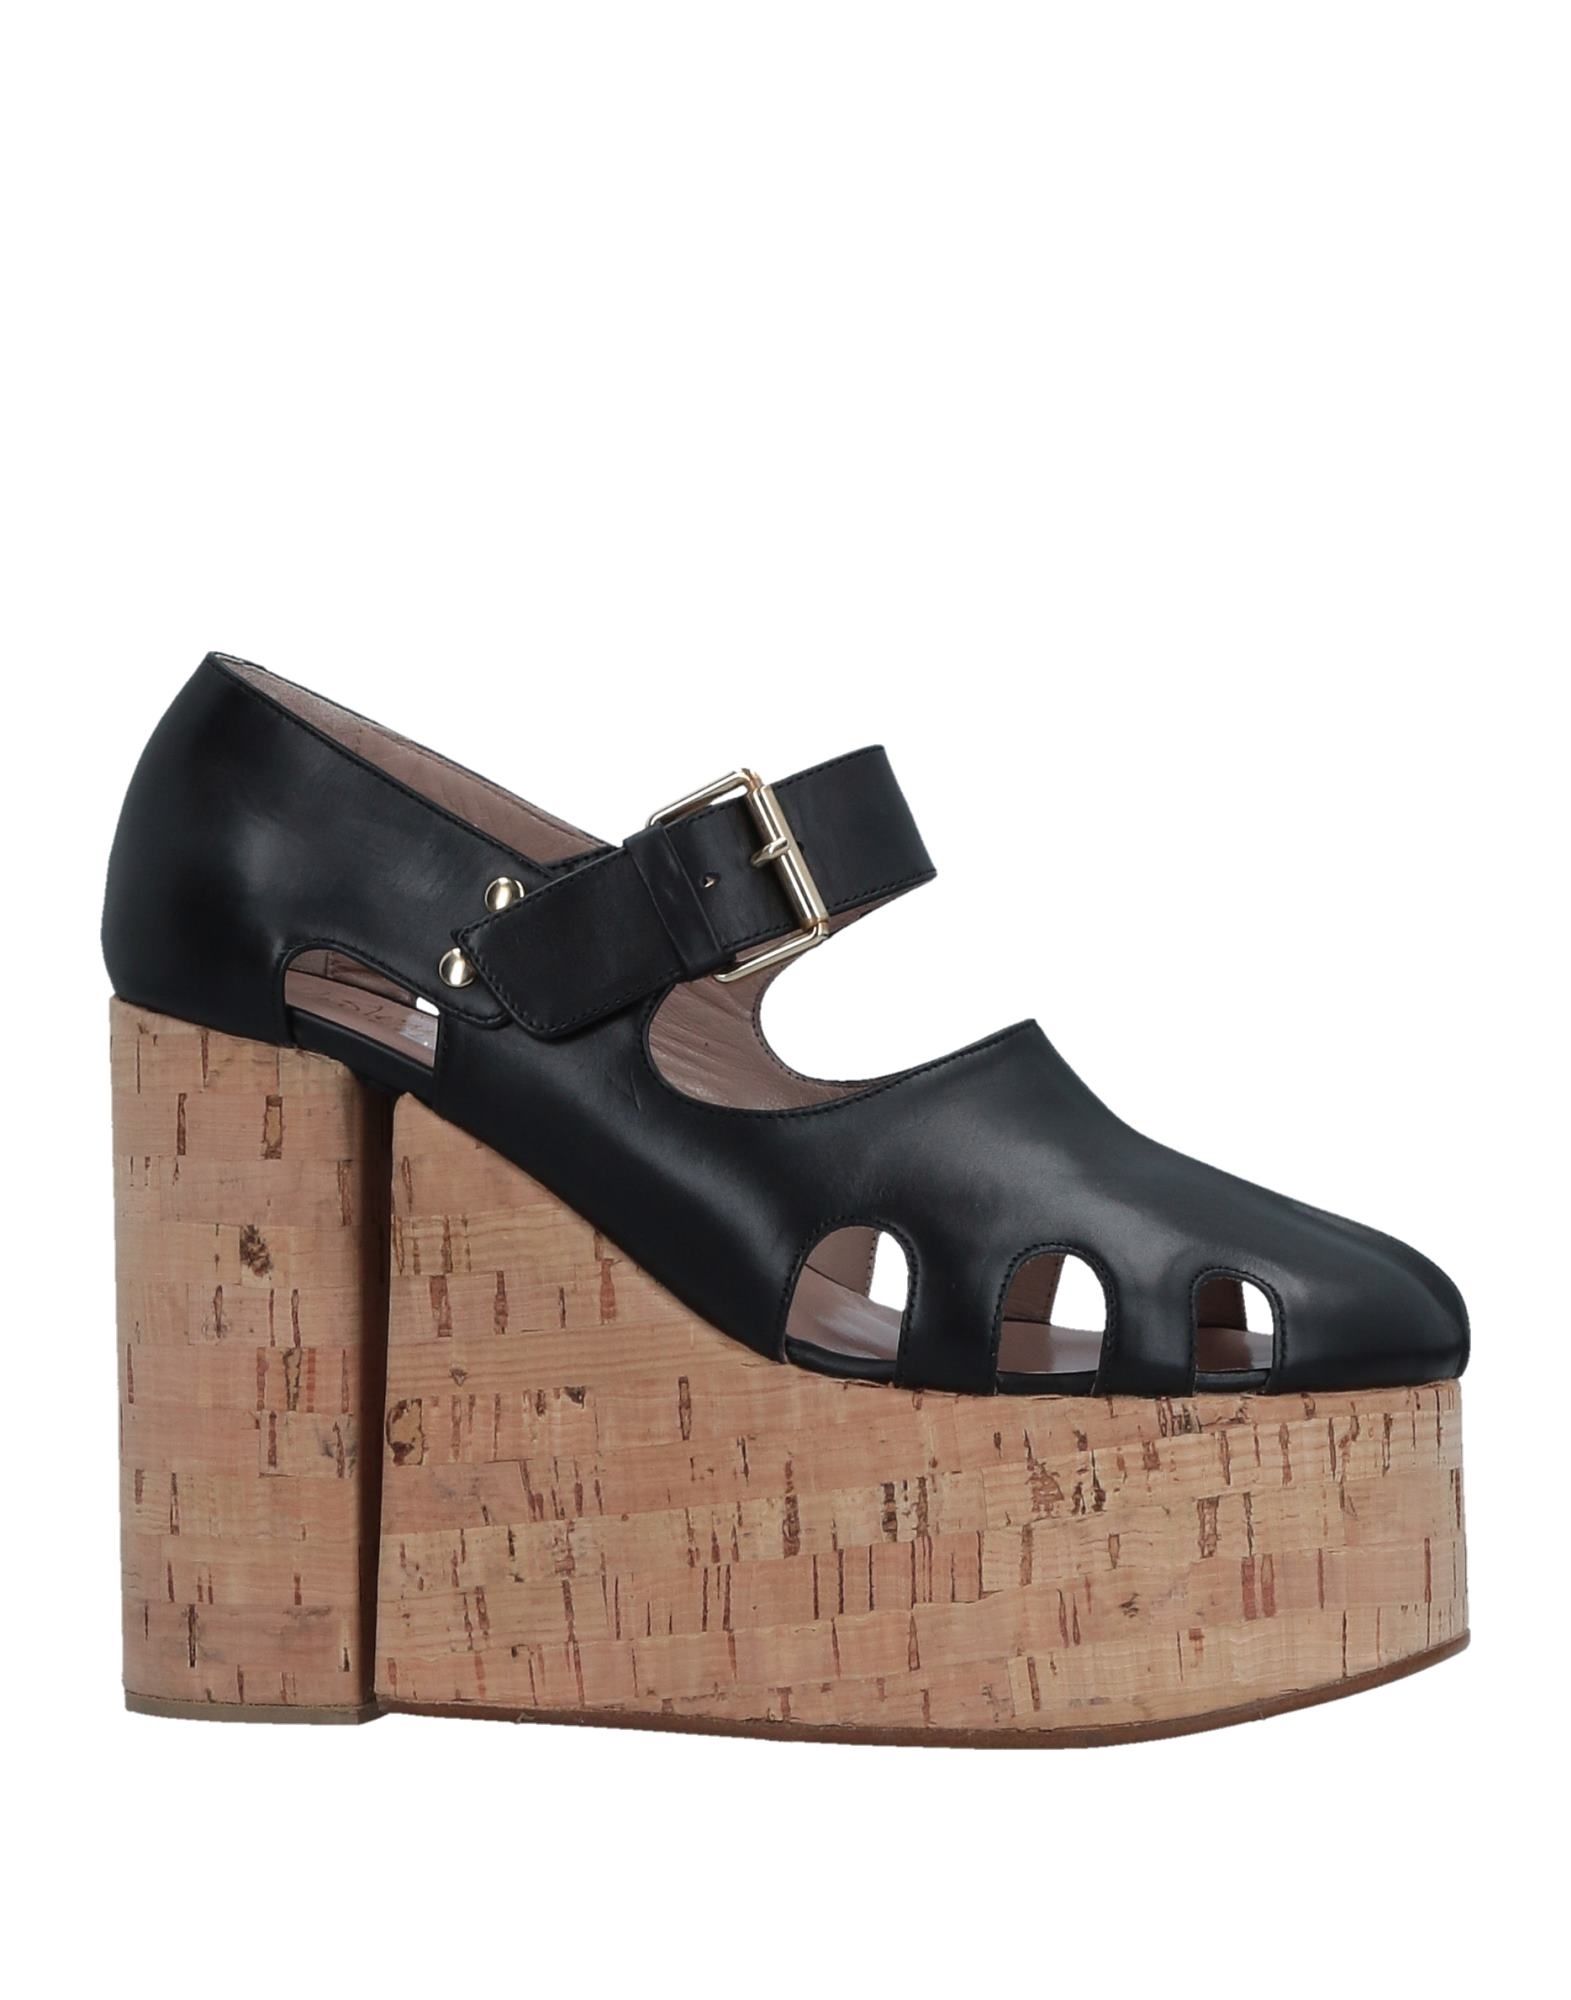 Vivienne Westwood Sandals